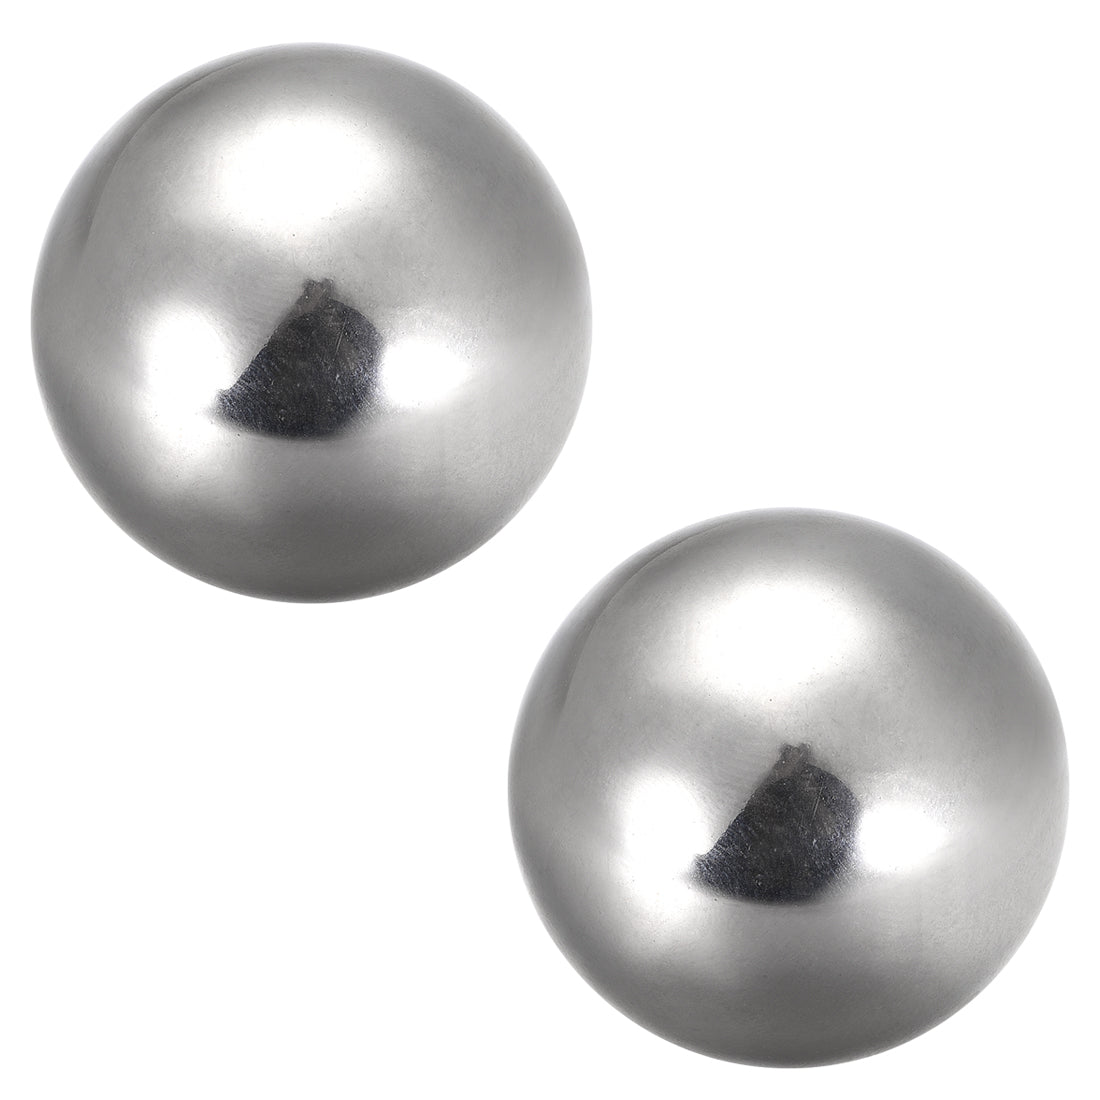 uxcell Uxcell Precision Chrome Steel Bearing Balls 40mm G10 2pcs